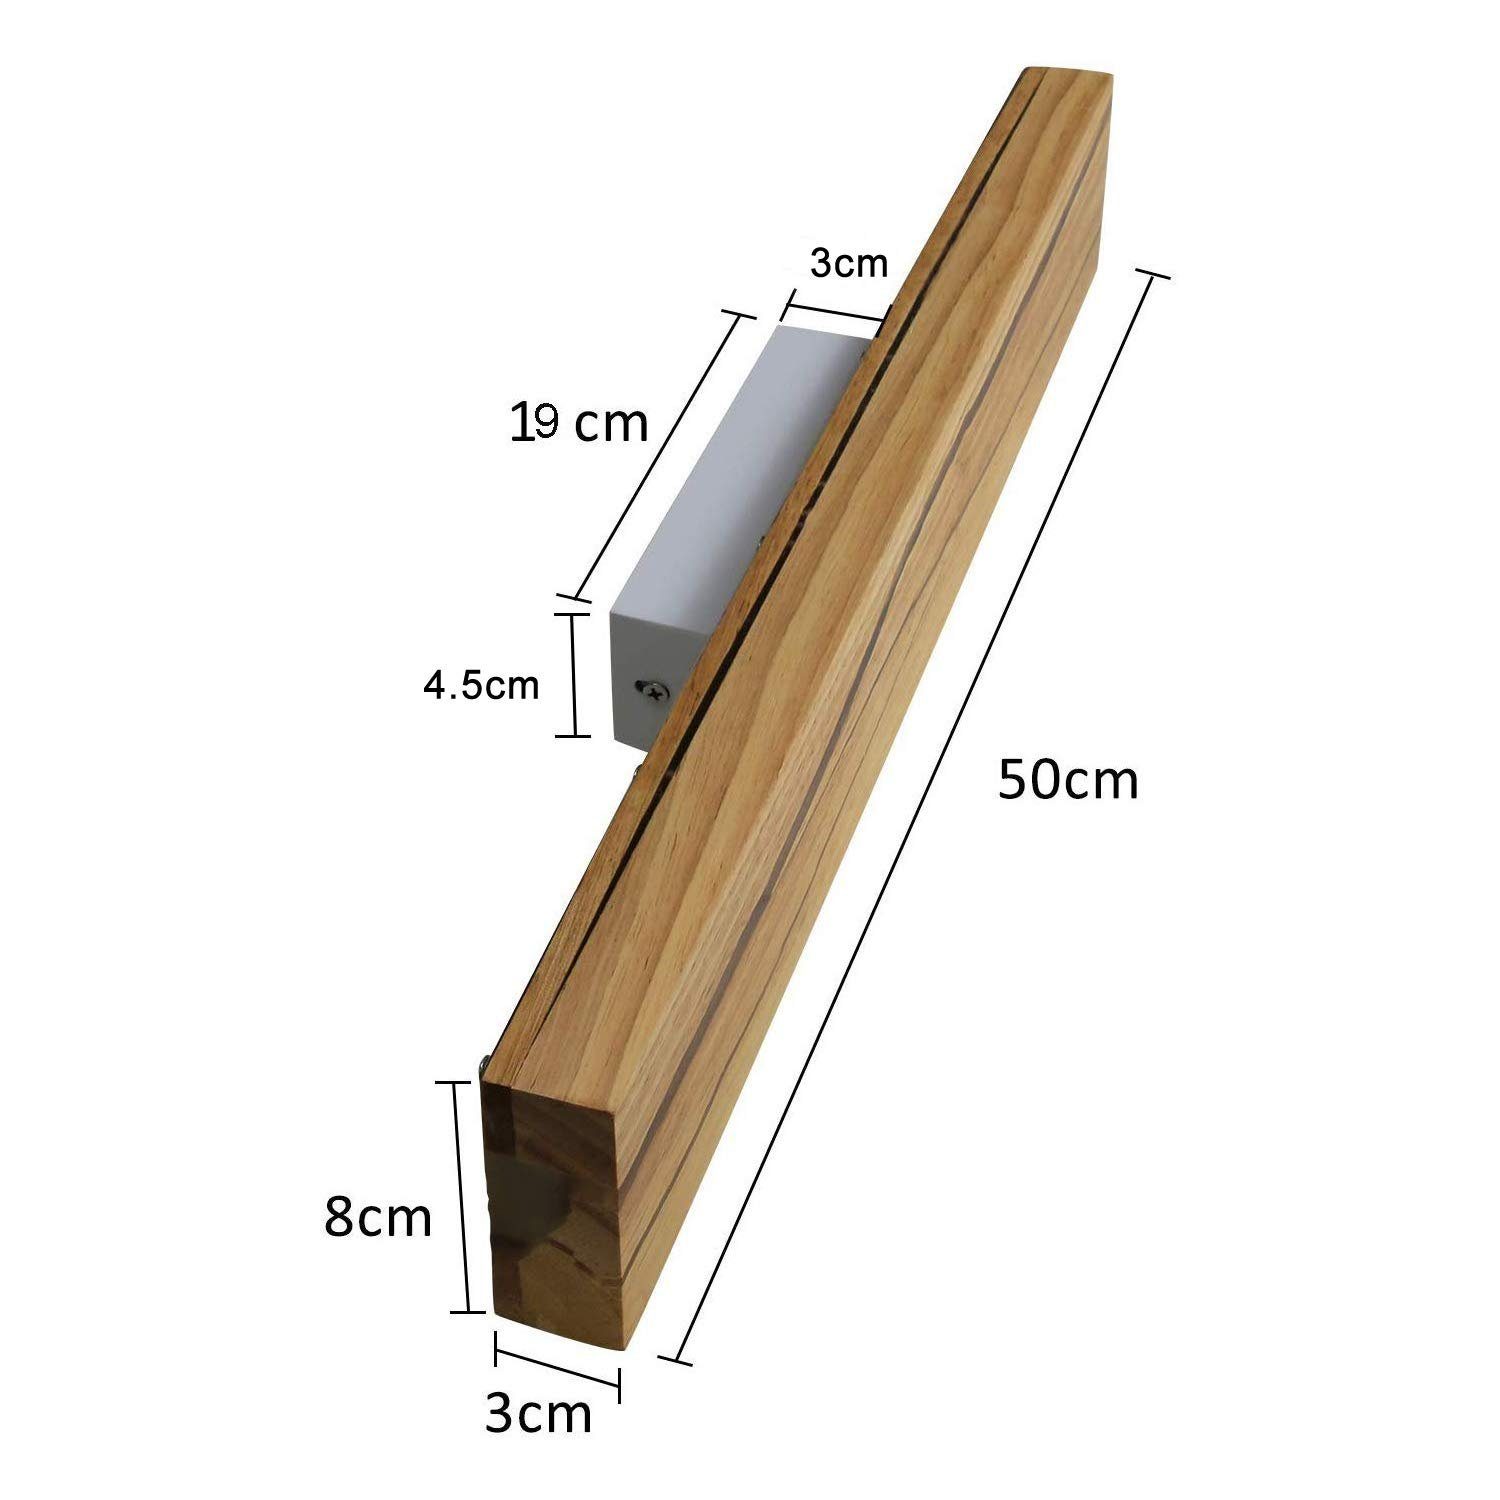 fest Treppe Holz 50/100CM LED integriert, Holzmaserung Nettlife Schlafzimmer wandleuchte warmweiß, Innen 360°, Natürlichkeit Charme, Flur Drehbar Wandleuchte